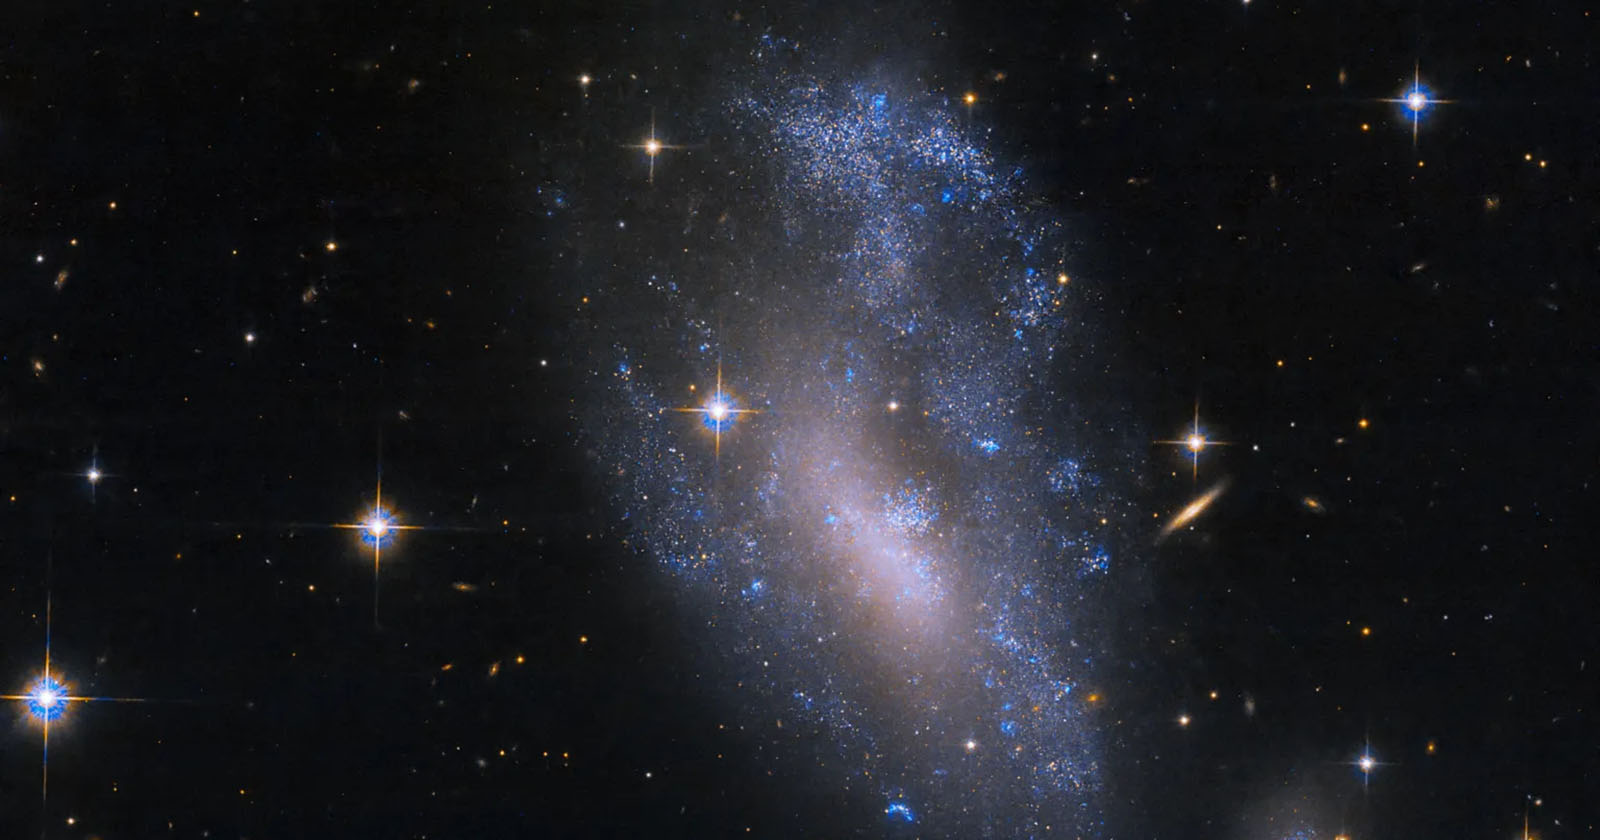 Hubble Space Telescope colliding galaxies